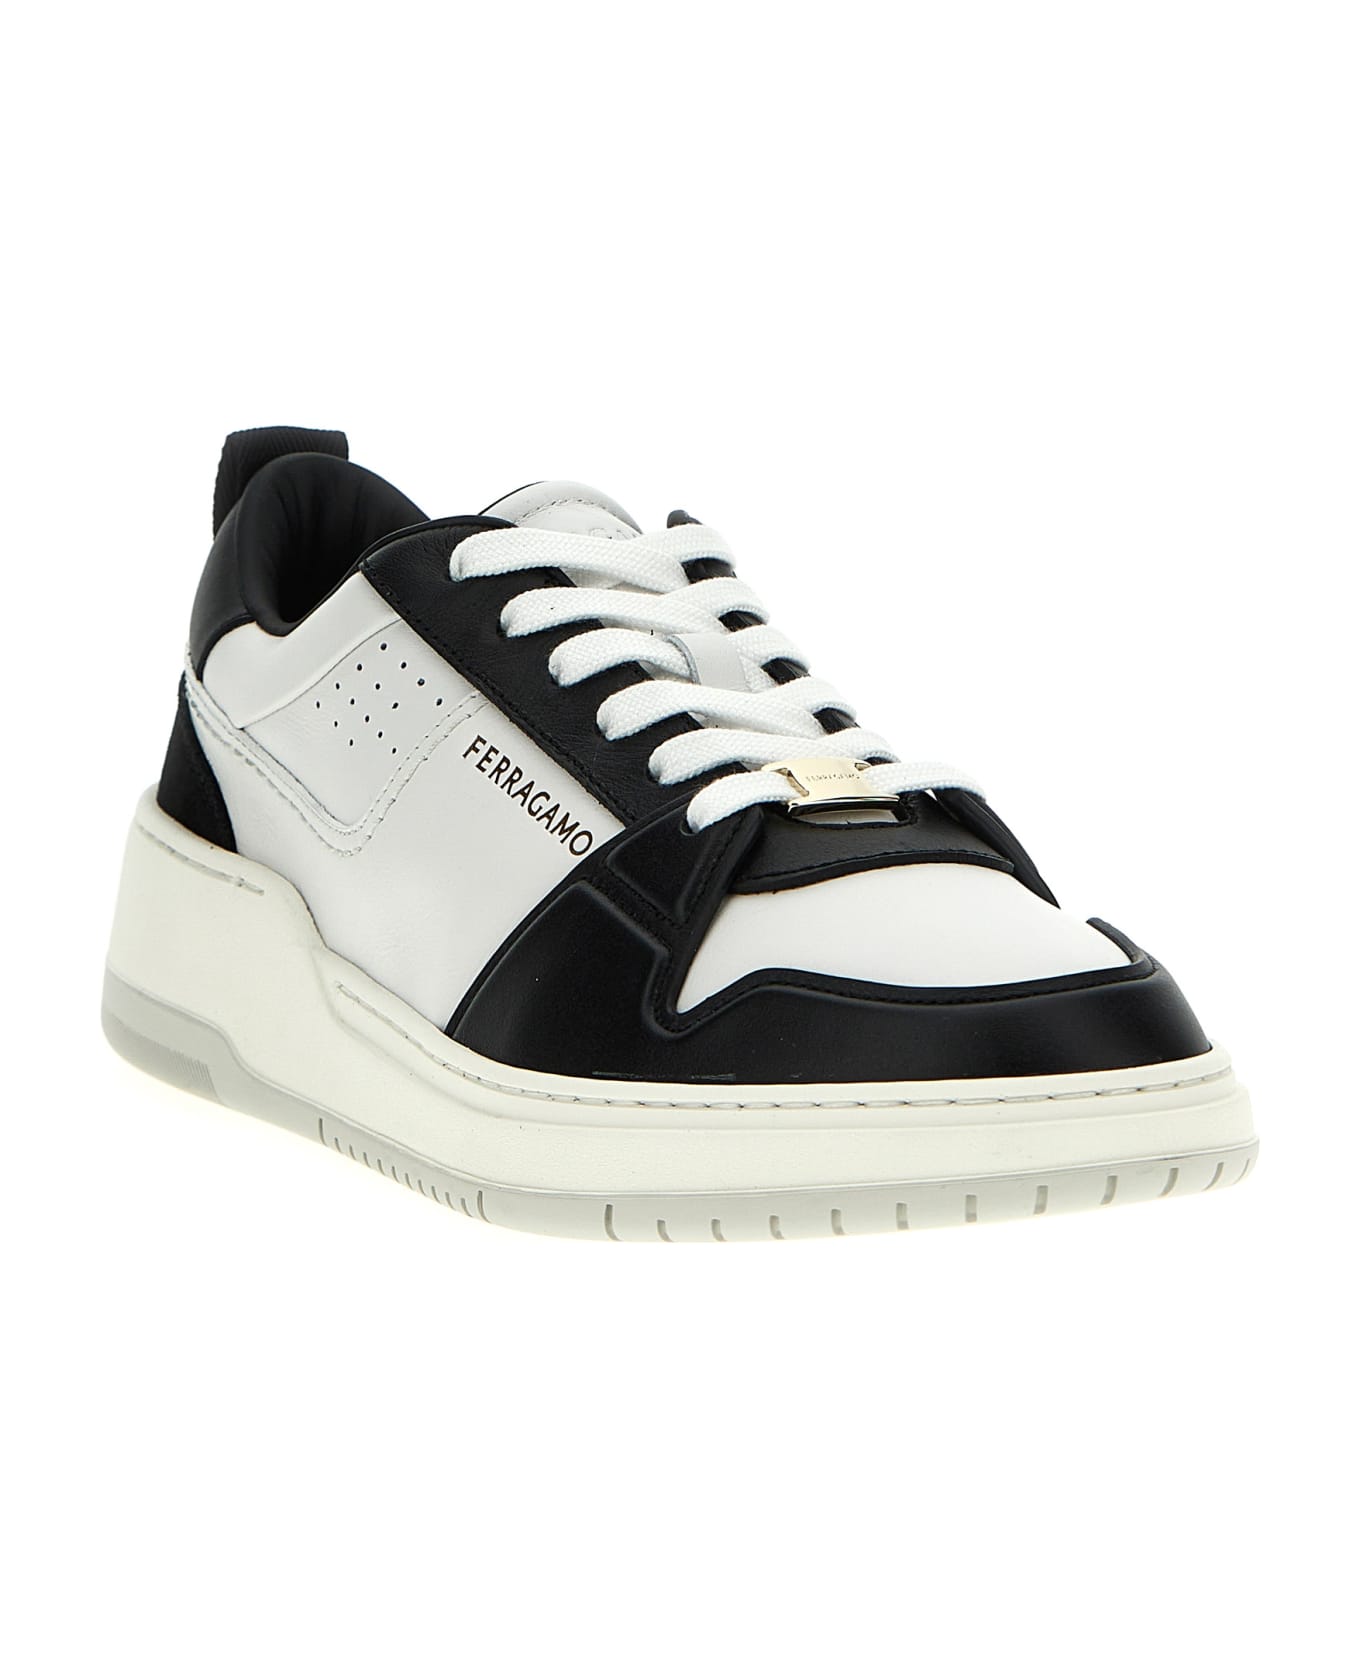 Ferragamo Two-tone Leather Sneakers - White/Black